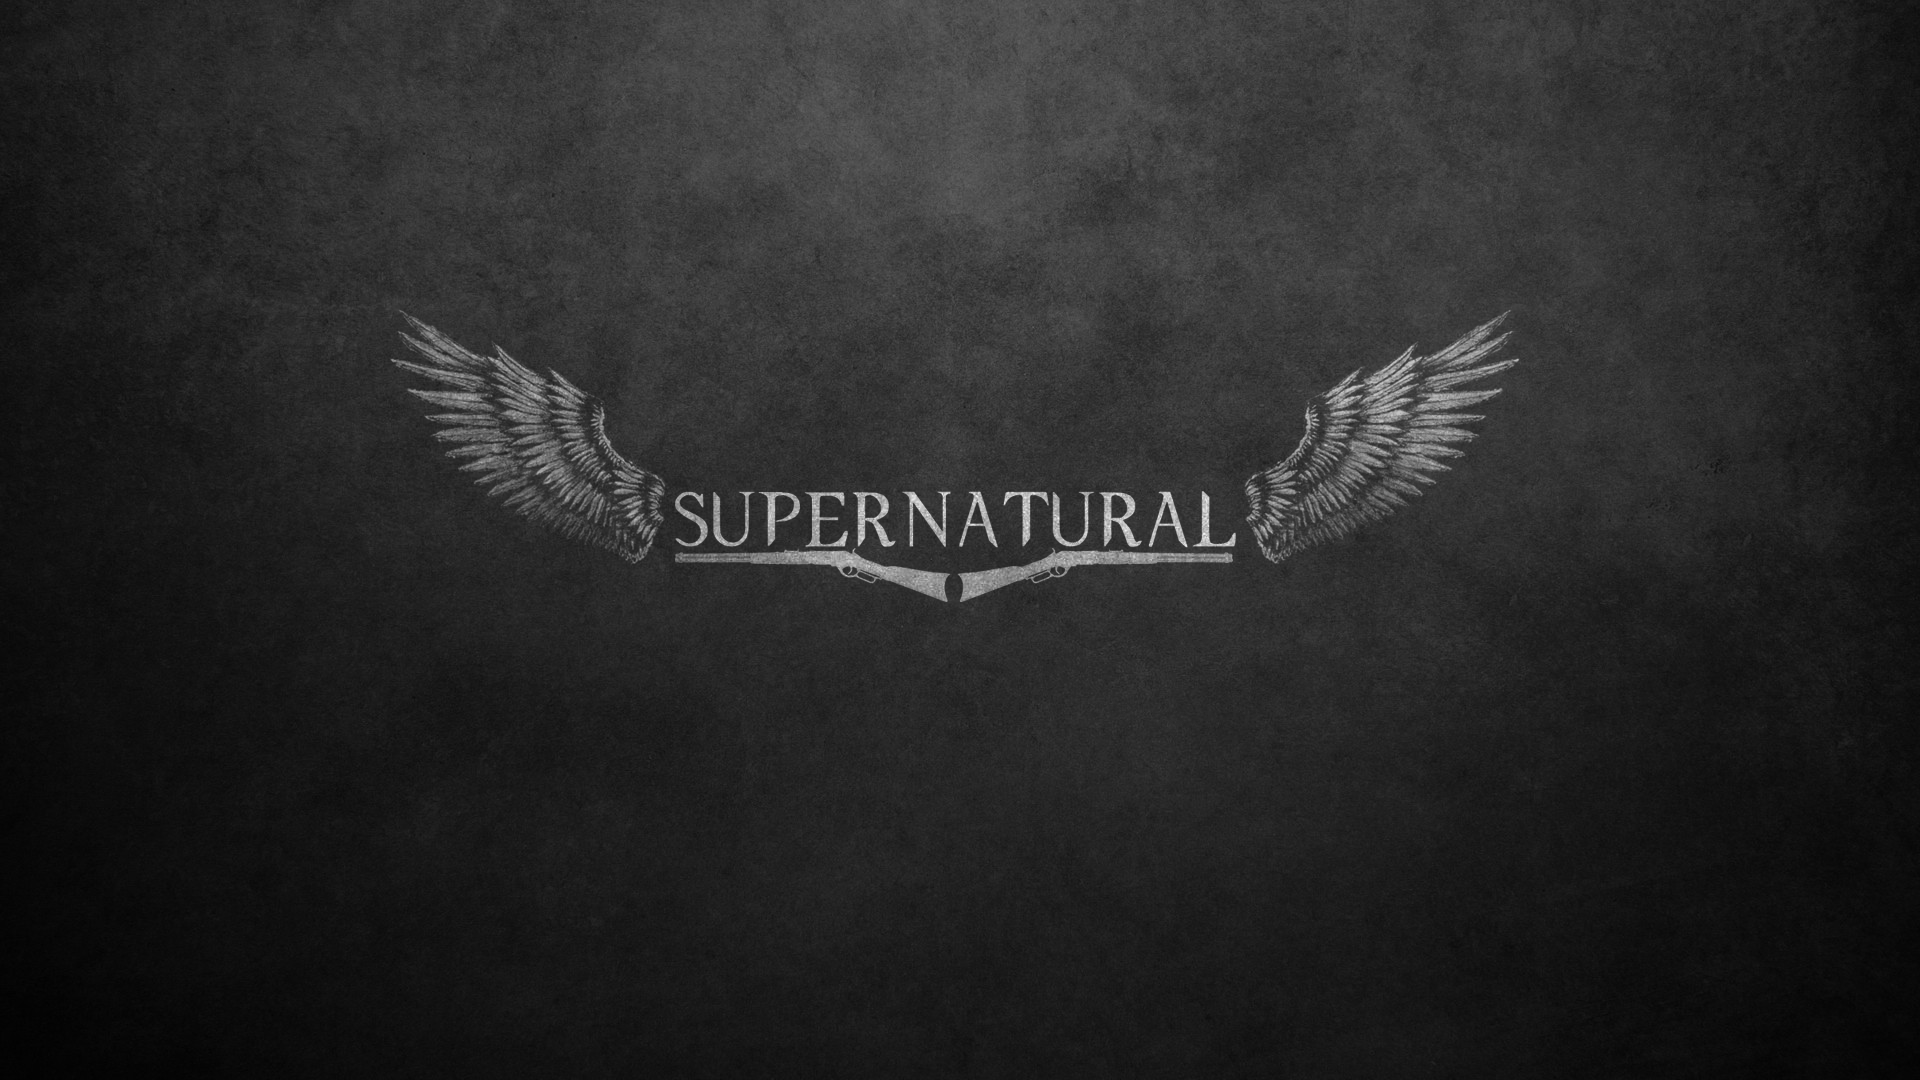 Supernatural: A blog